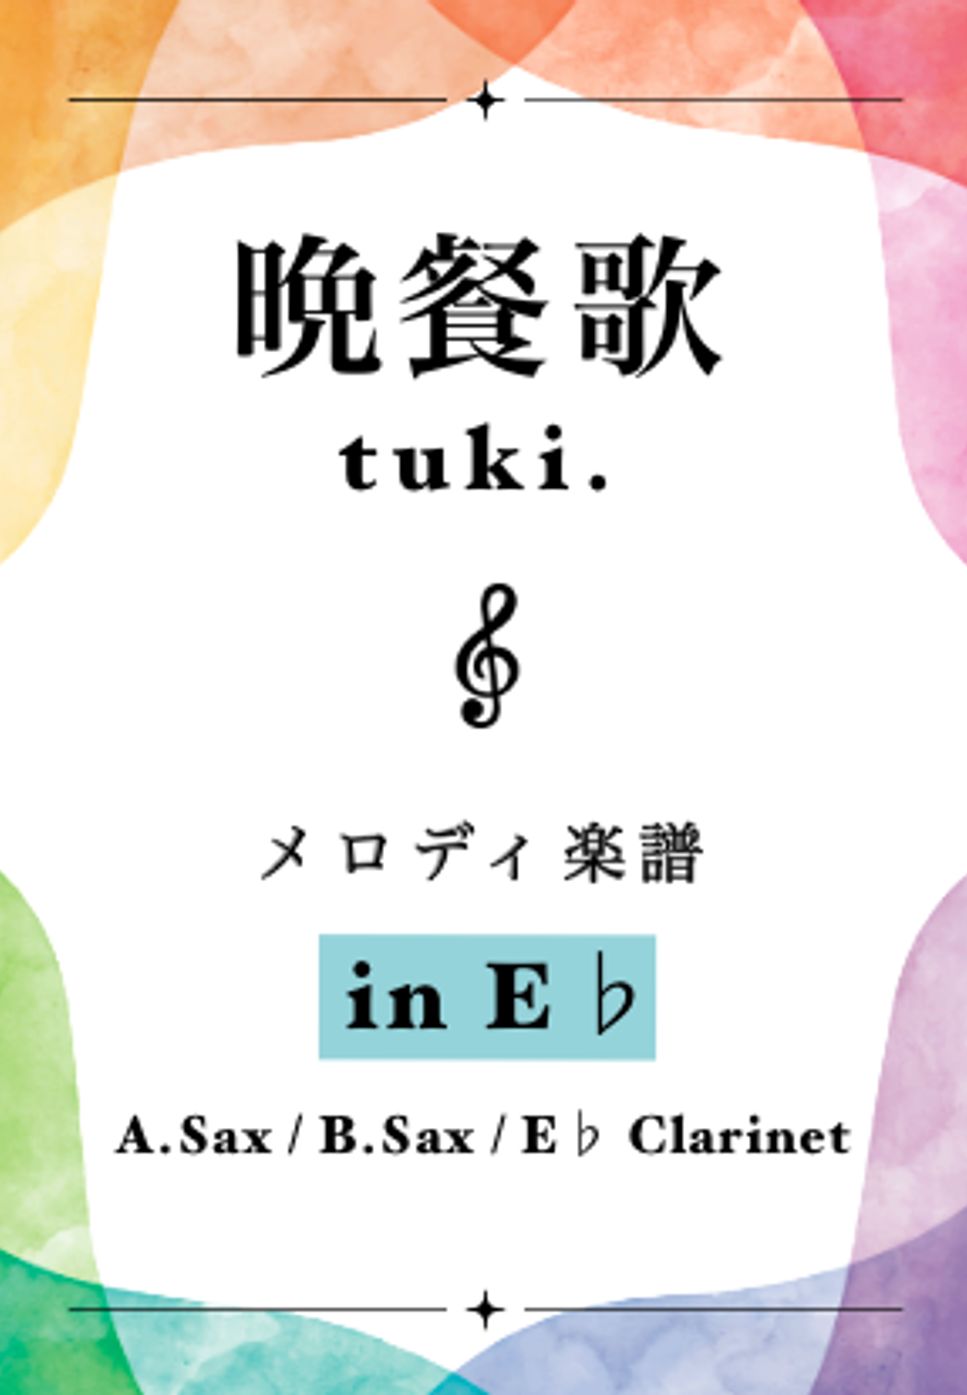 tuki. - 晩餐歌 (In Eb) by Sumika - Sumichannel